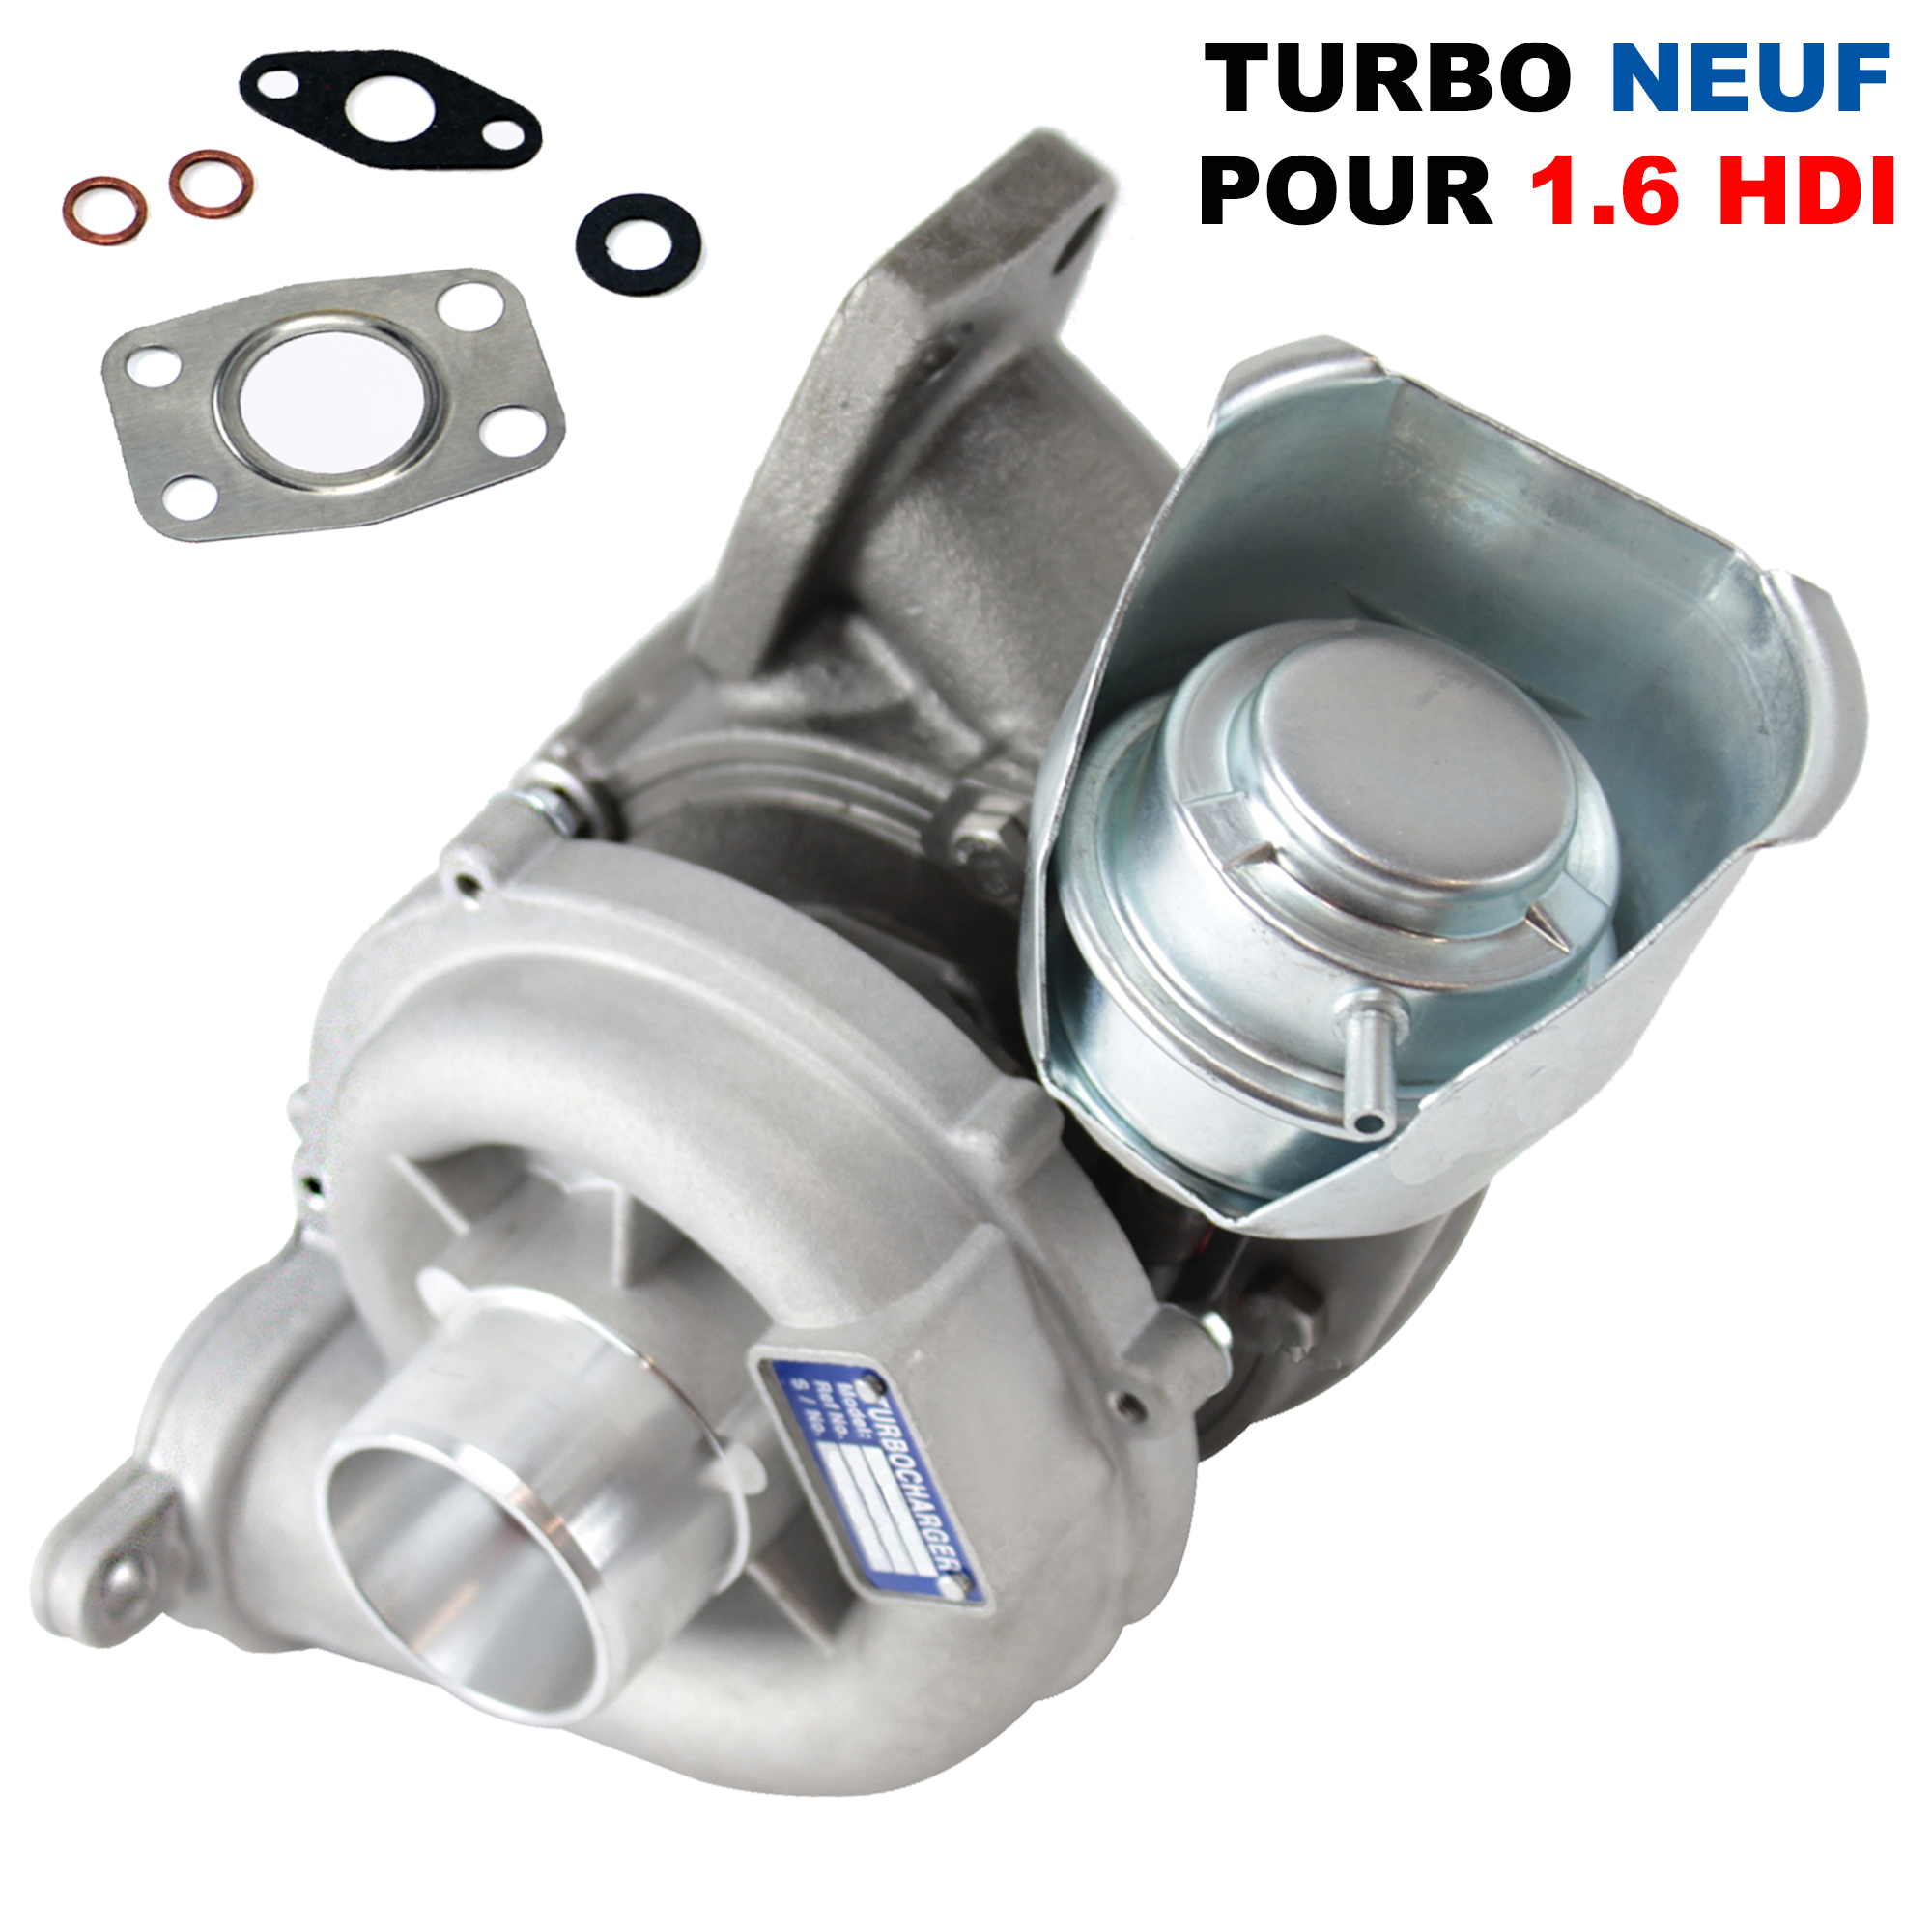 Turbo turbocompresseur neuf pour Peugeot Citroën 1.6 - 1.6 HDI 10 ch